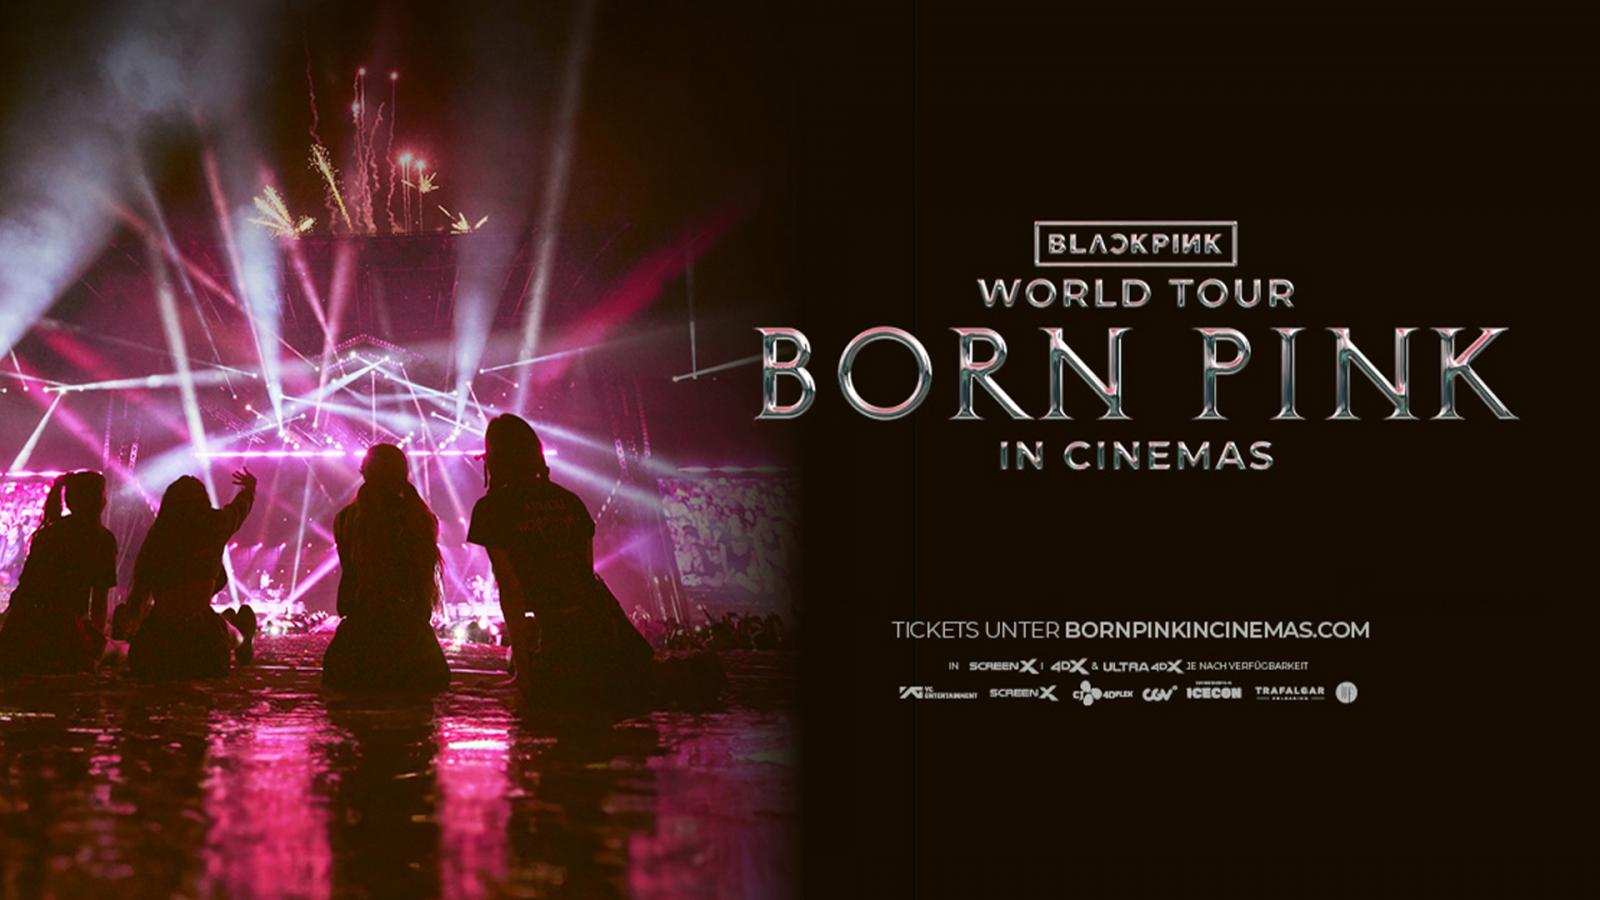 BLACKPINK WORLD TOUR (BORN BINK) IN CINEMAS